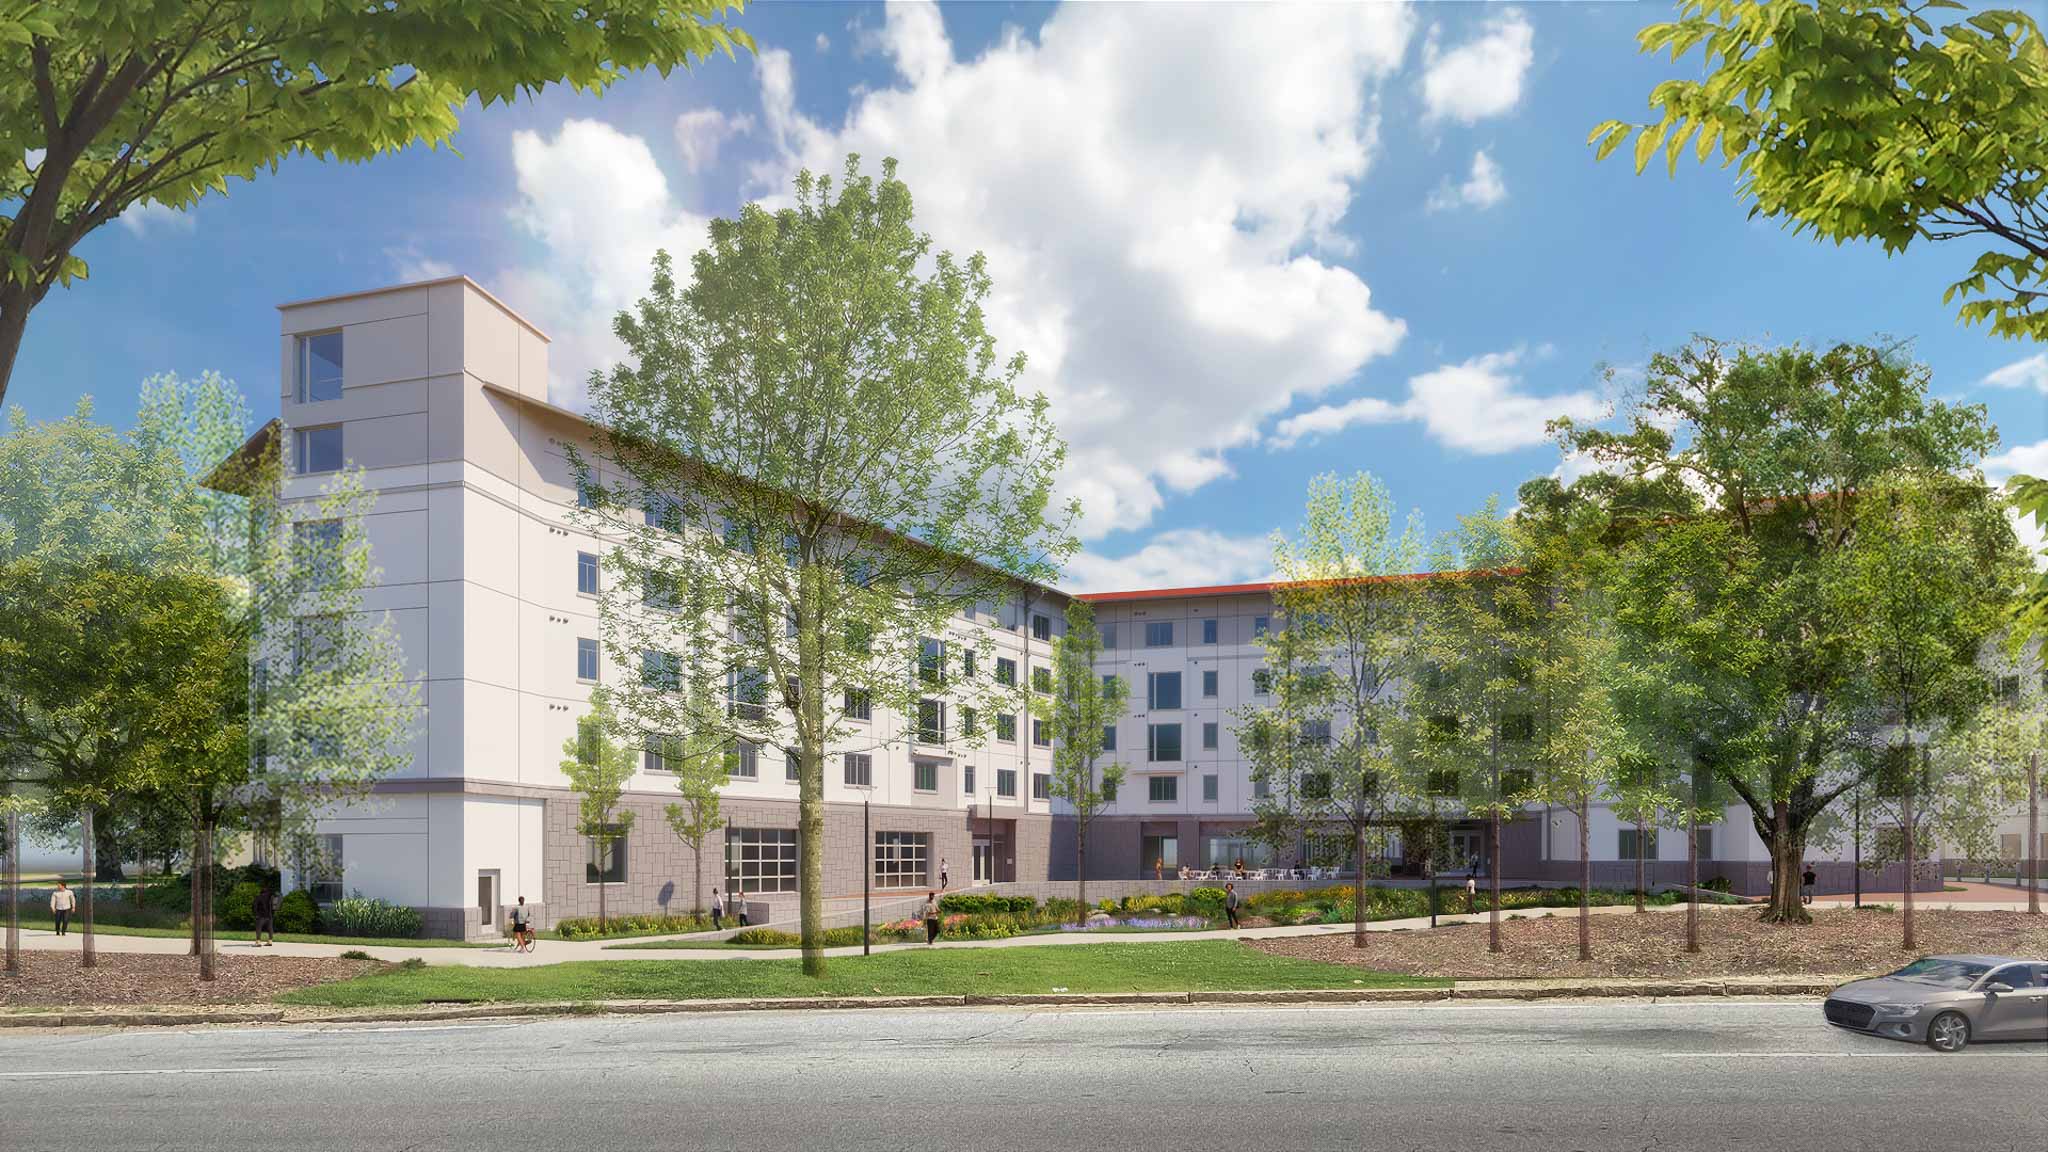 Emory graduate student housing plan raises traffic, historic